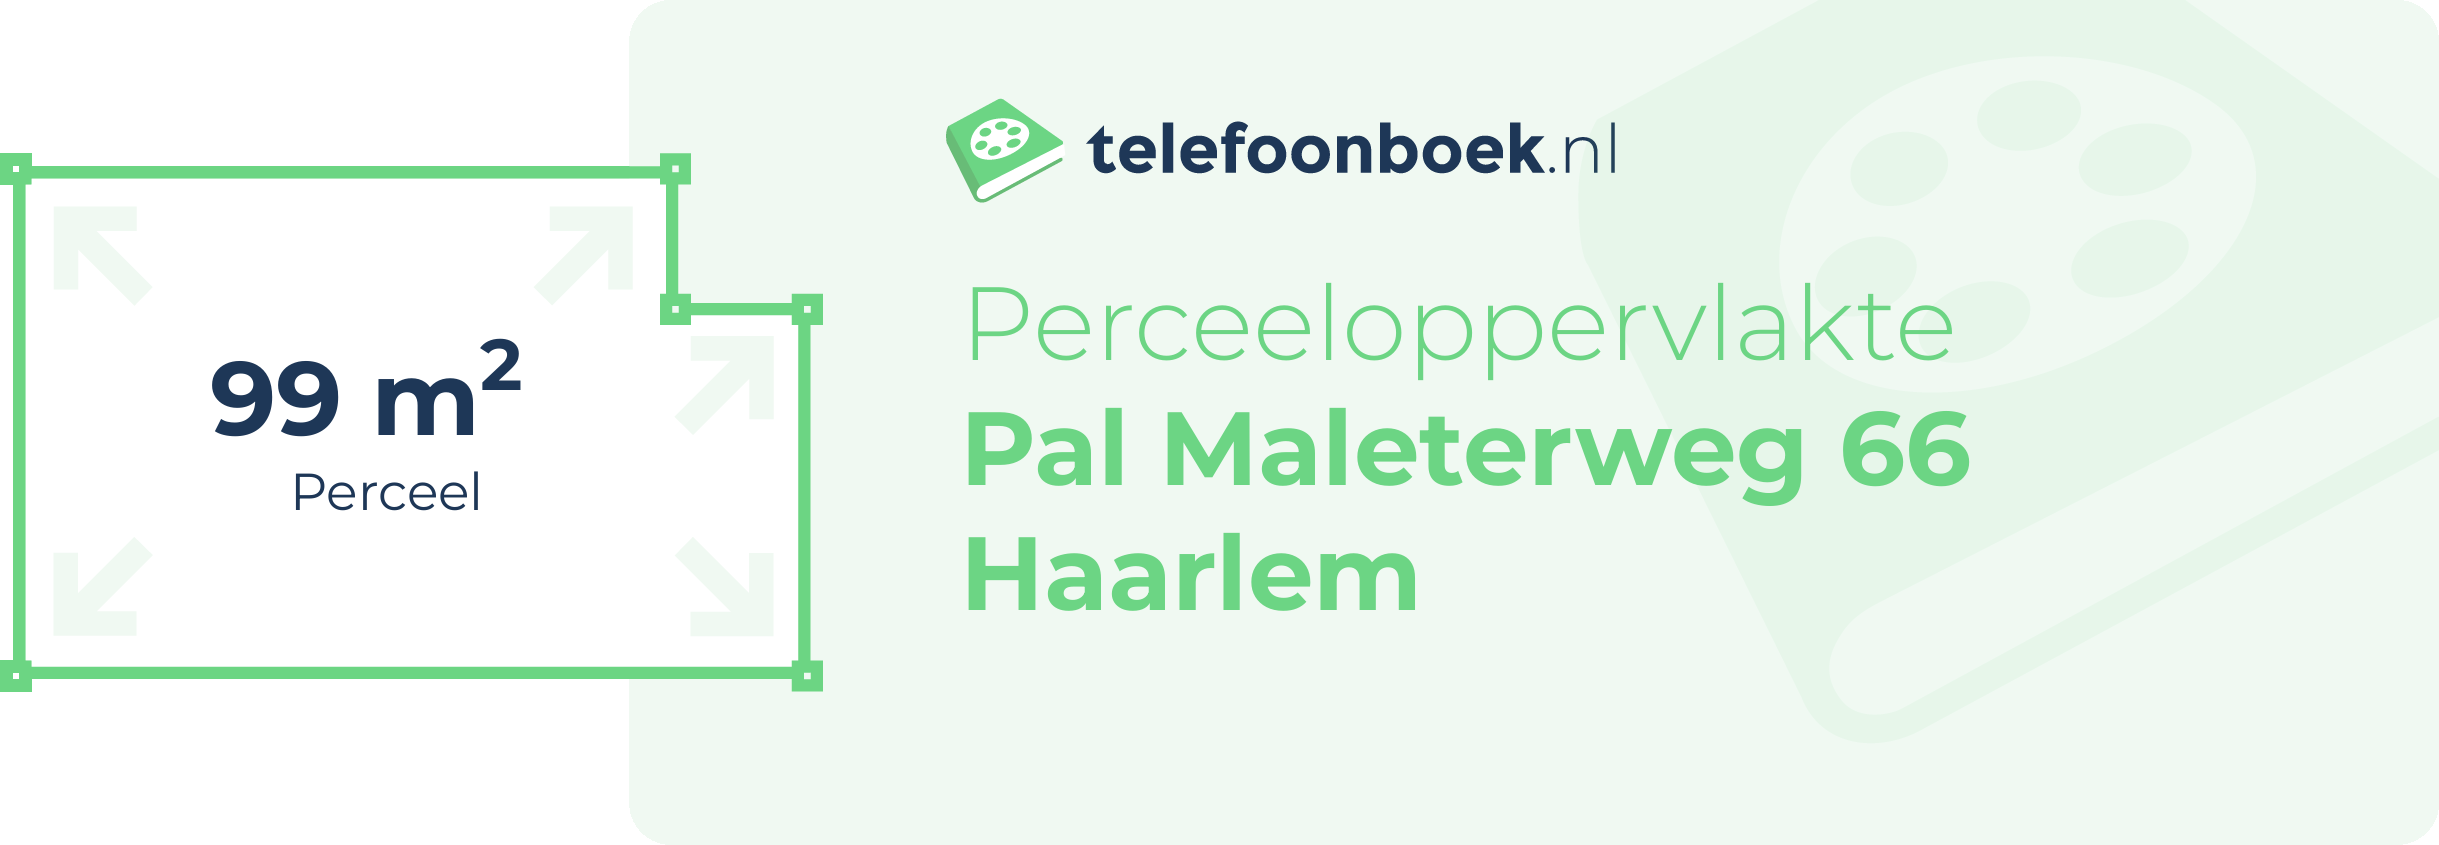 Perceeloppervlakte Pal Maleterweg 66 Haarlem